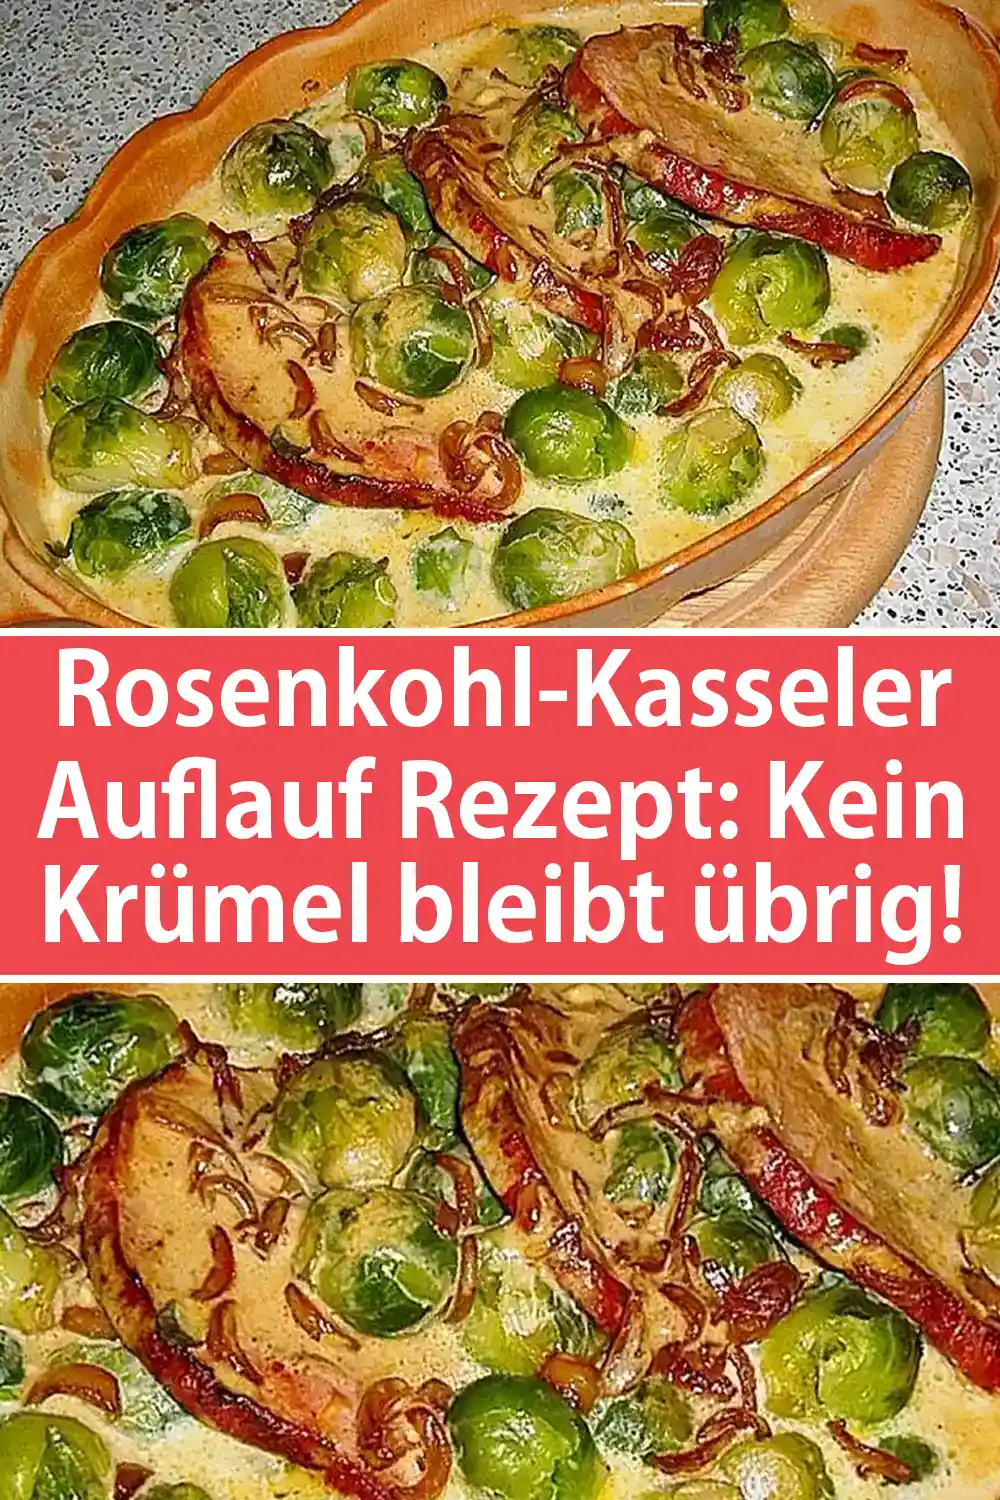 Rosenkohl-Kasseler-Auflauf Rezept: Kein Krümel bleibt übrig!